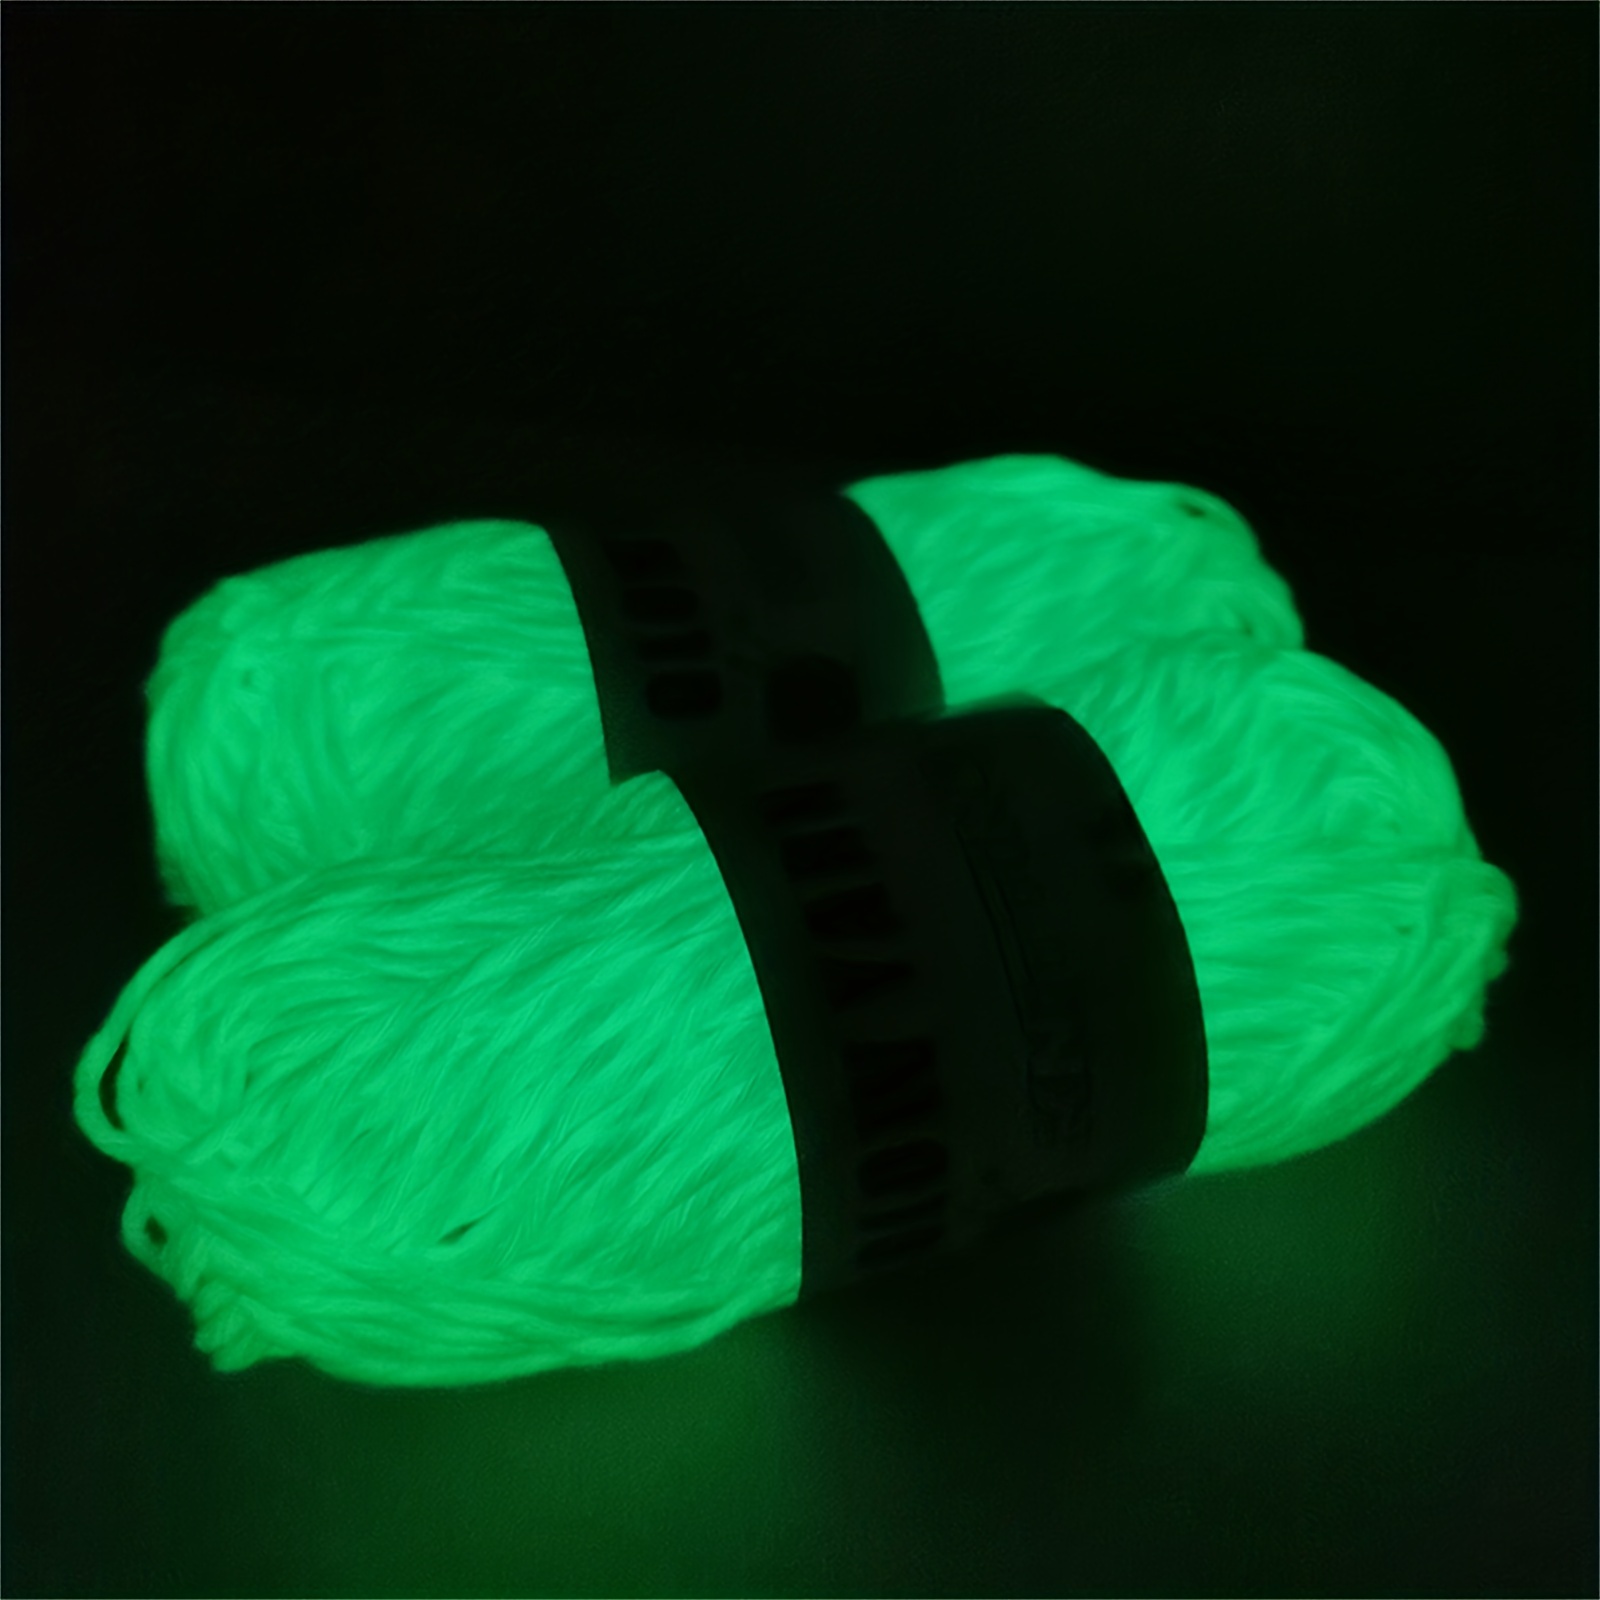 Wovilon Glow in The Dark Yarn for Crochet - Fluorescent Luminous Scrubby  Thread Knitting Glowing Yarn for Crocheting - Sewing Supplies for Knitting  Diy Crafts 